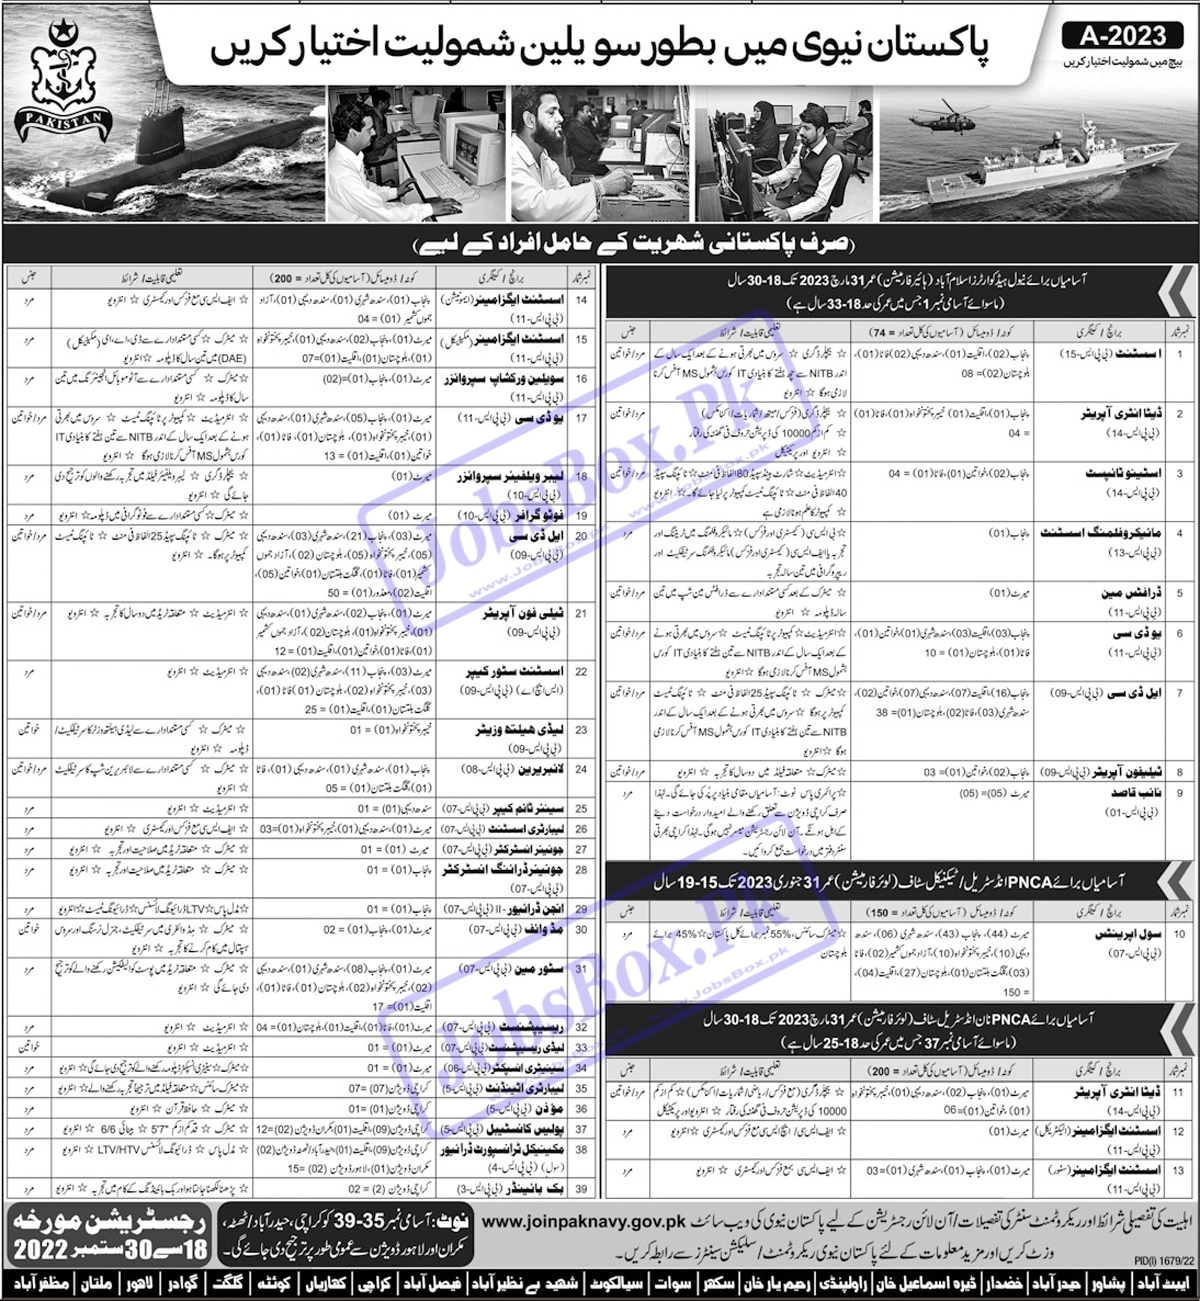 Pakistan Navy as Civilian Batch A-2023 Jobs 2022 | Civilian Recruitment